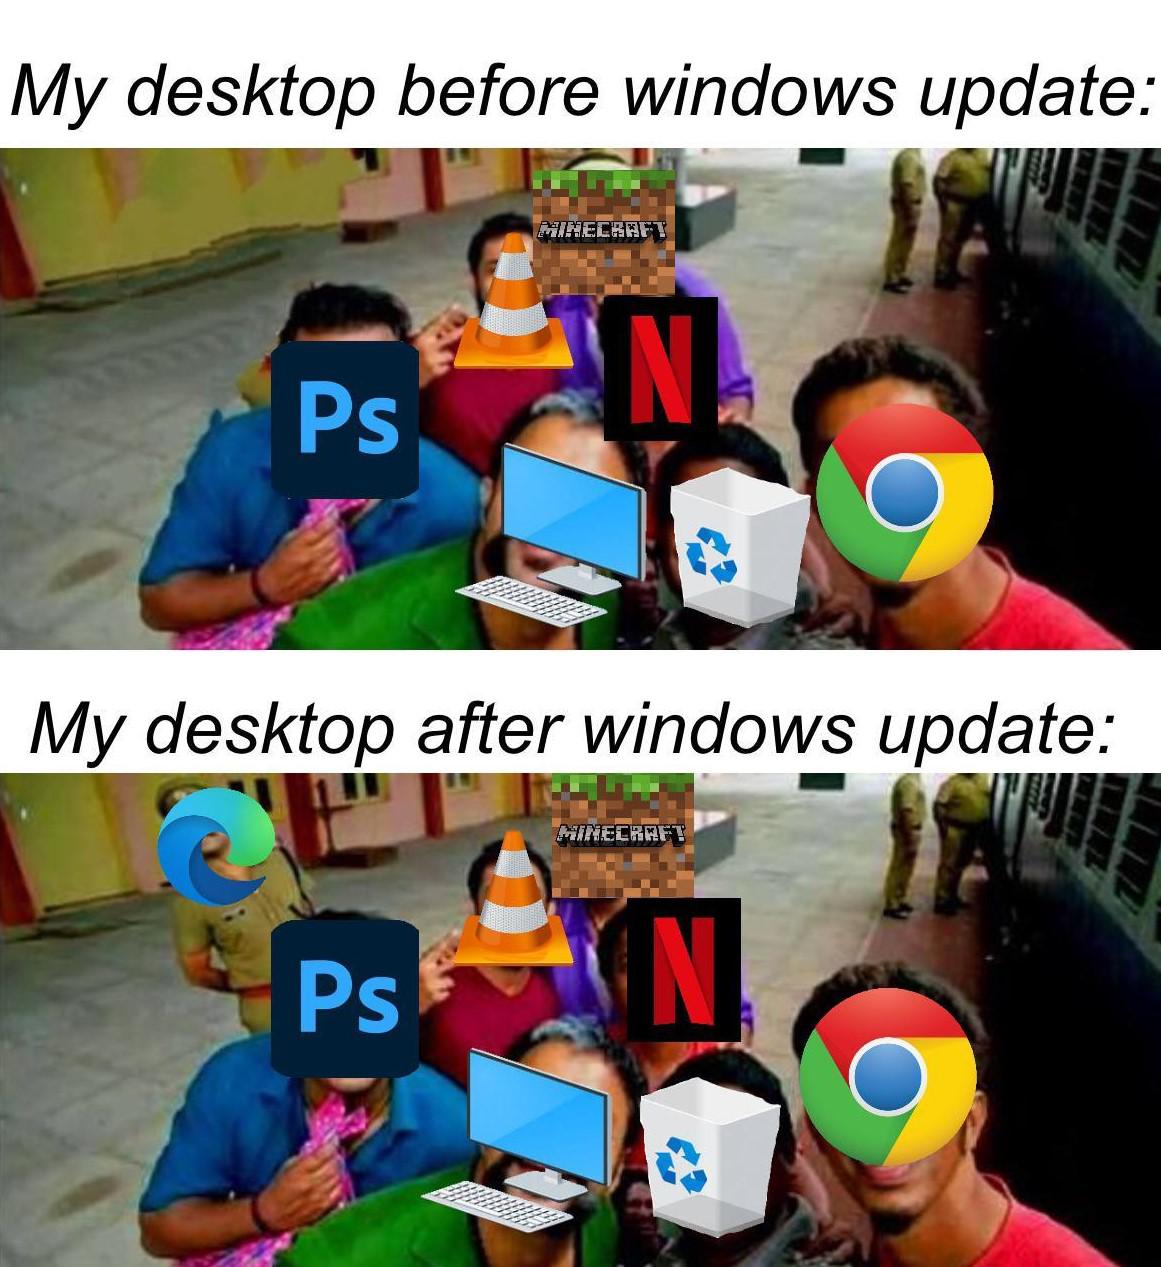 dank memes - windows memes - My desktop before windows update Minecraft N Ps My desktop after windows update Minecraft Ps N